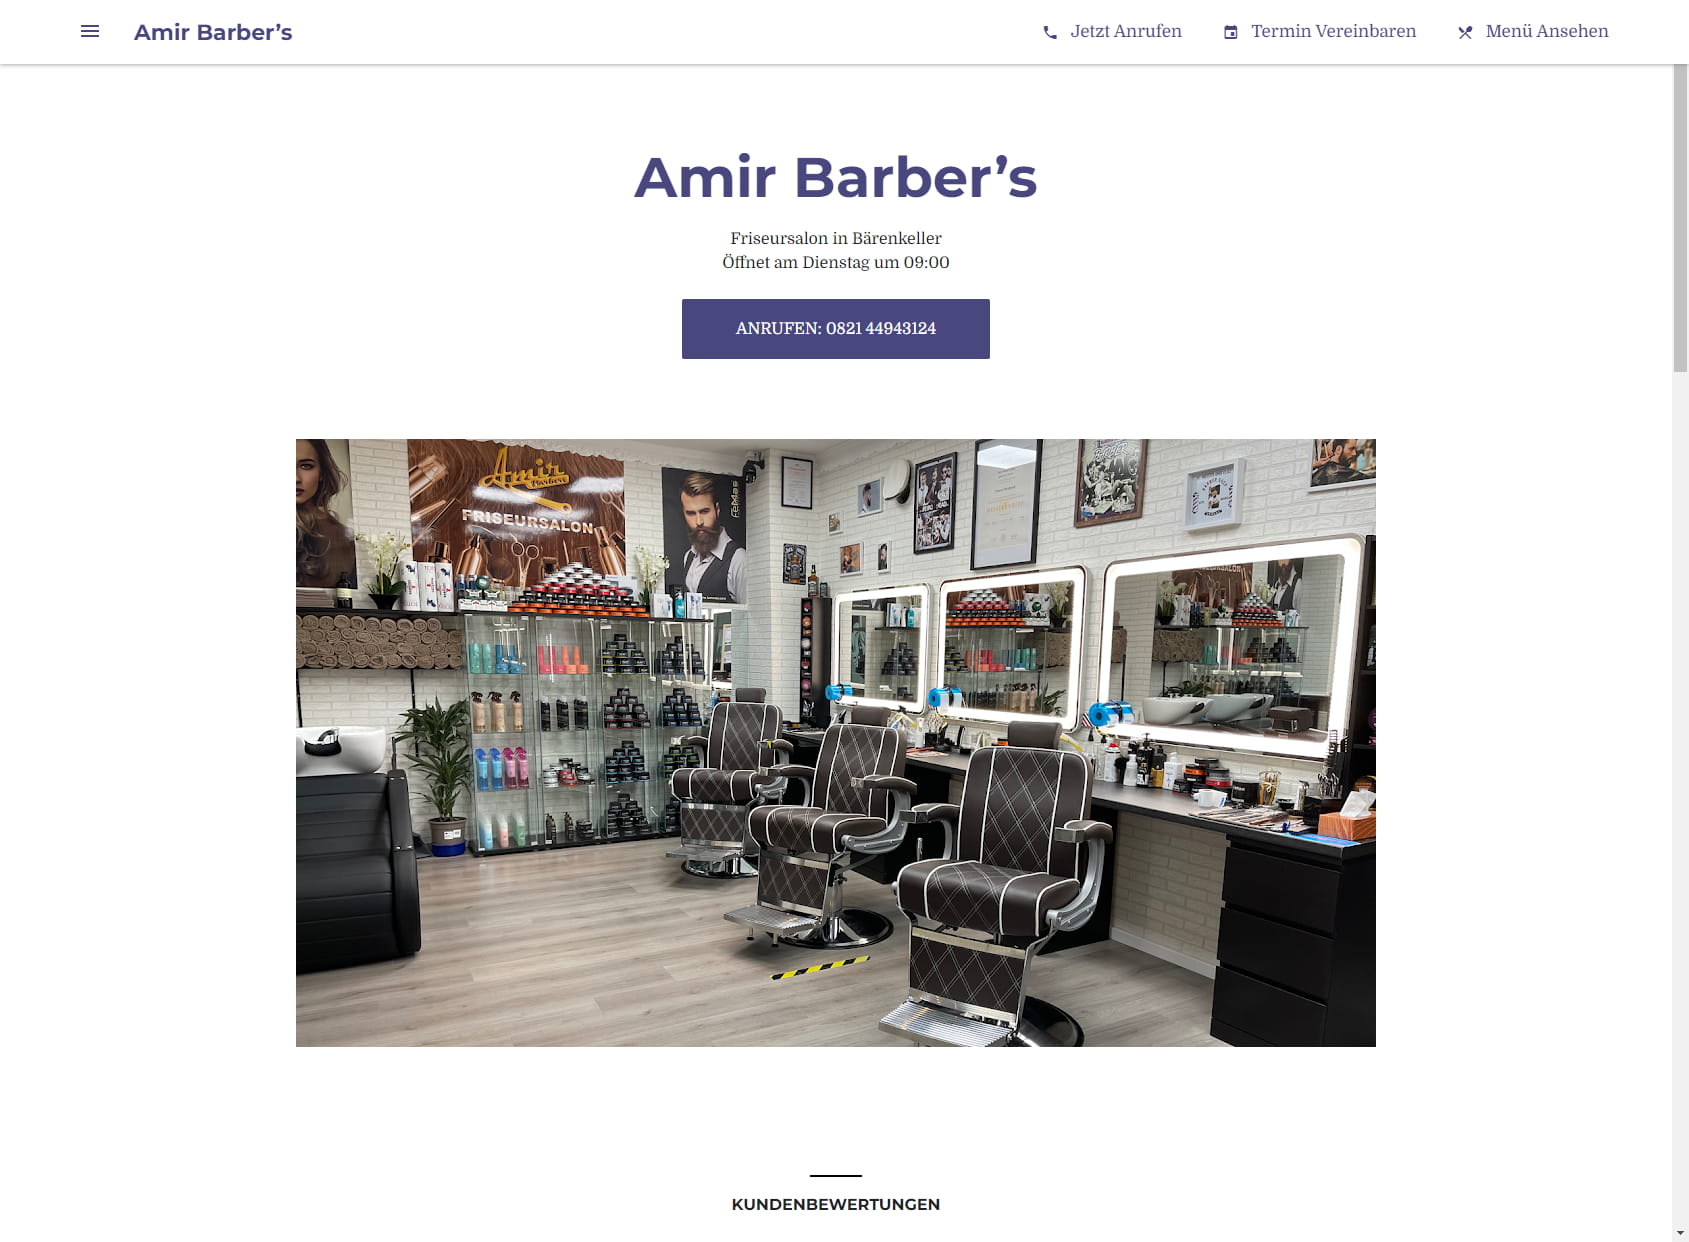 Amir Barber’s